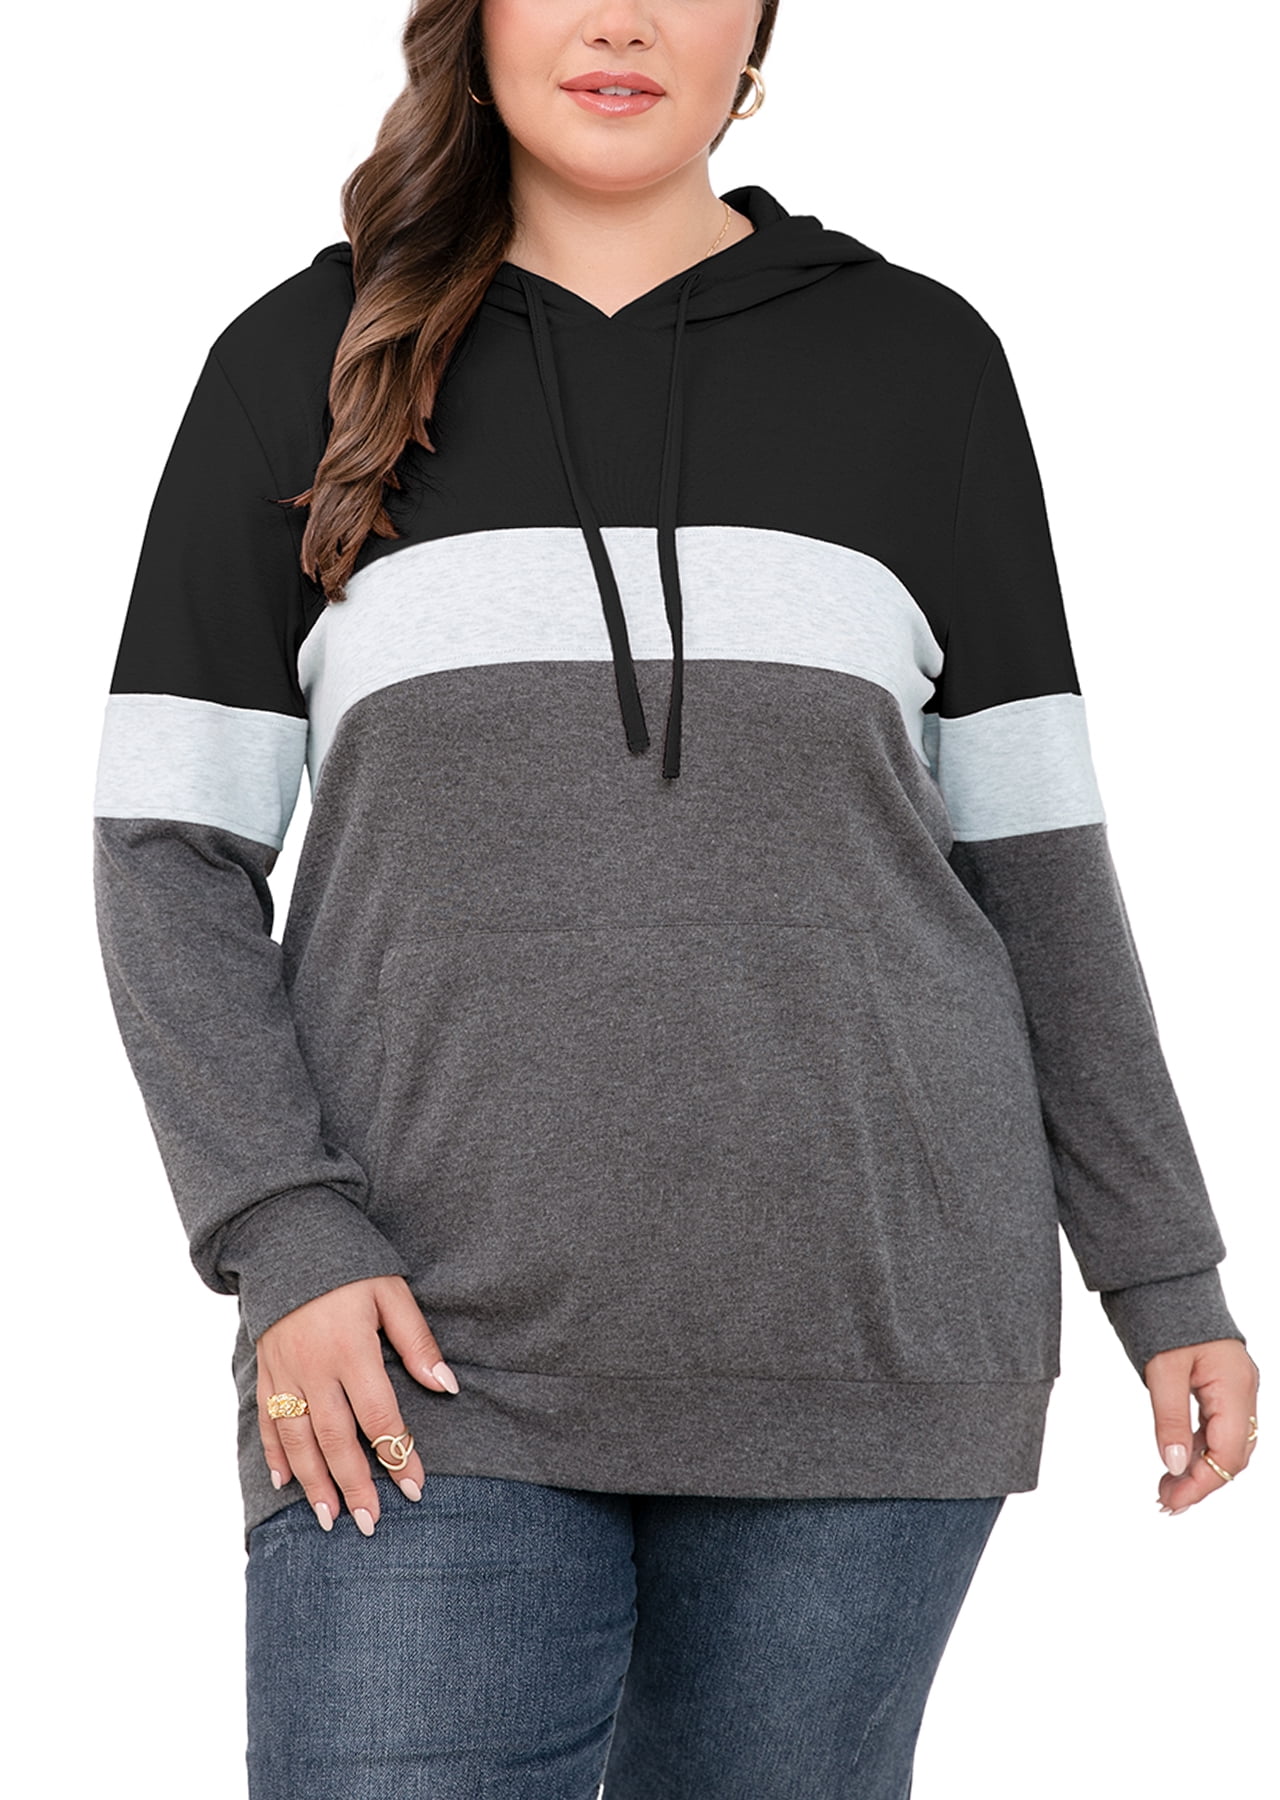 JuneFish Women's Plus Size Long Sleeve Sweatshirts Color Block Hoodies ...